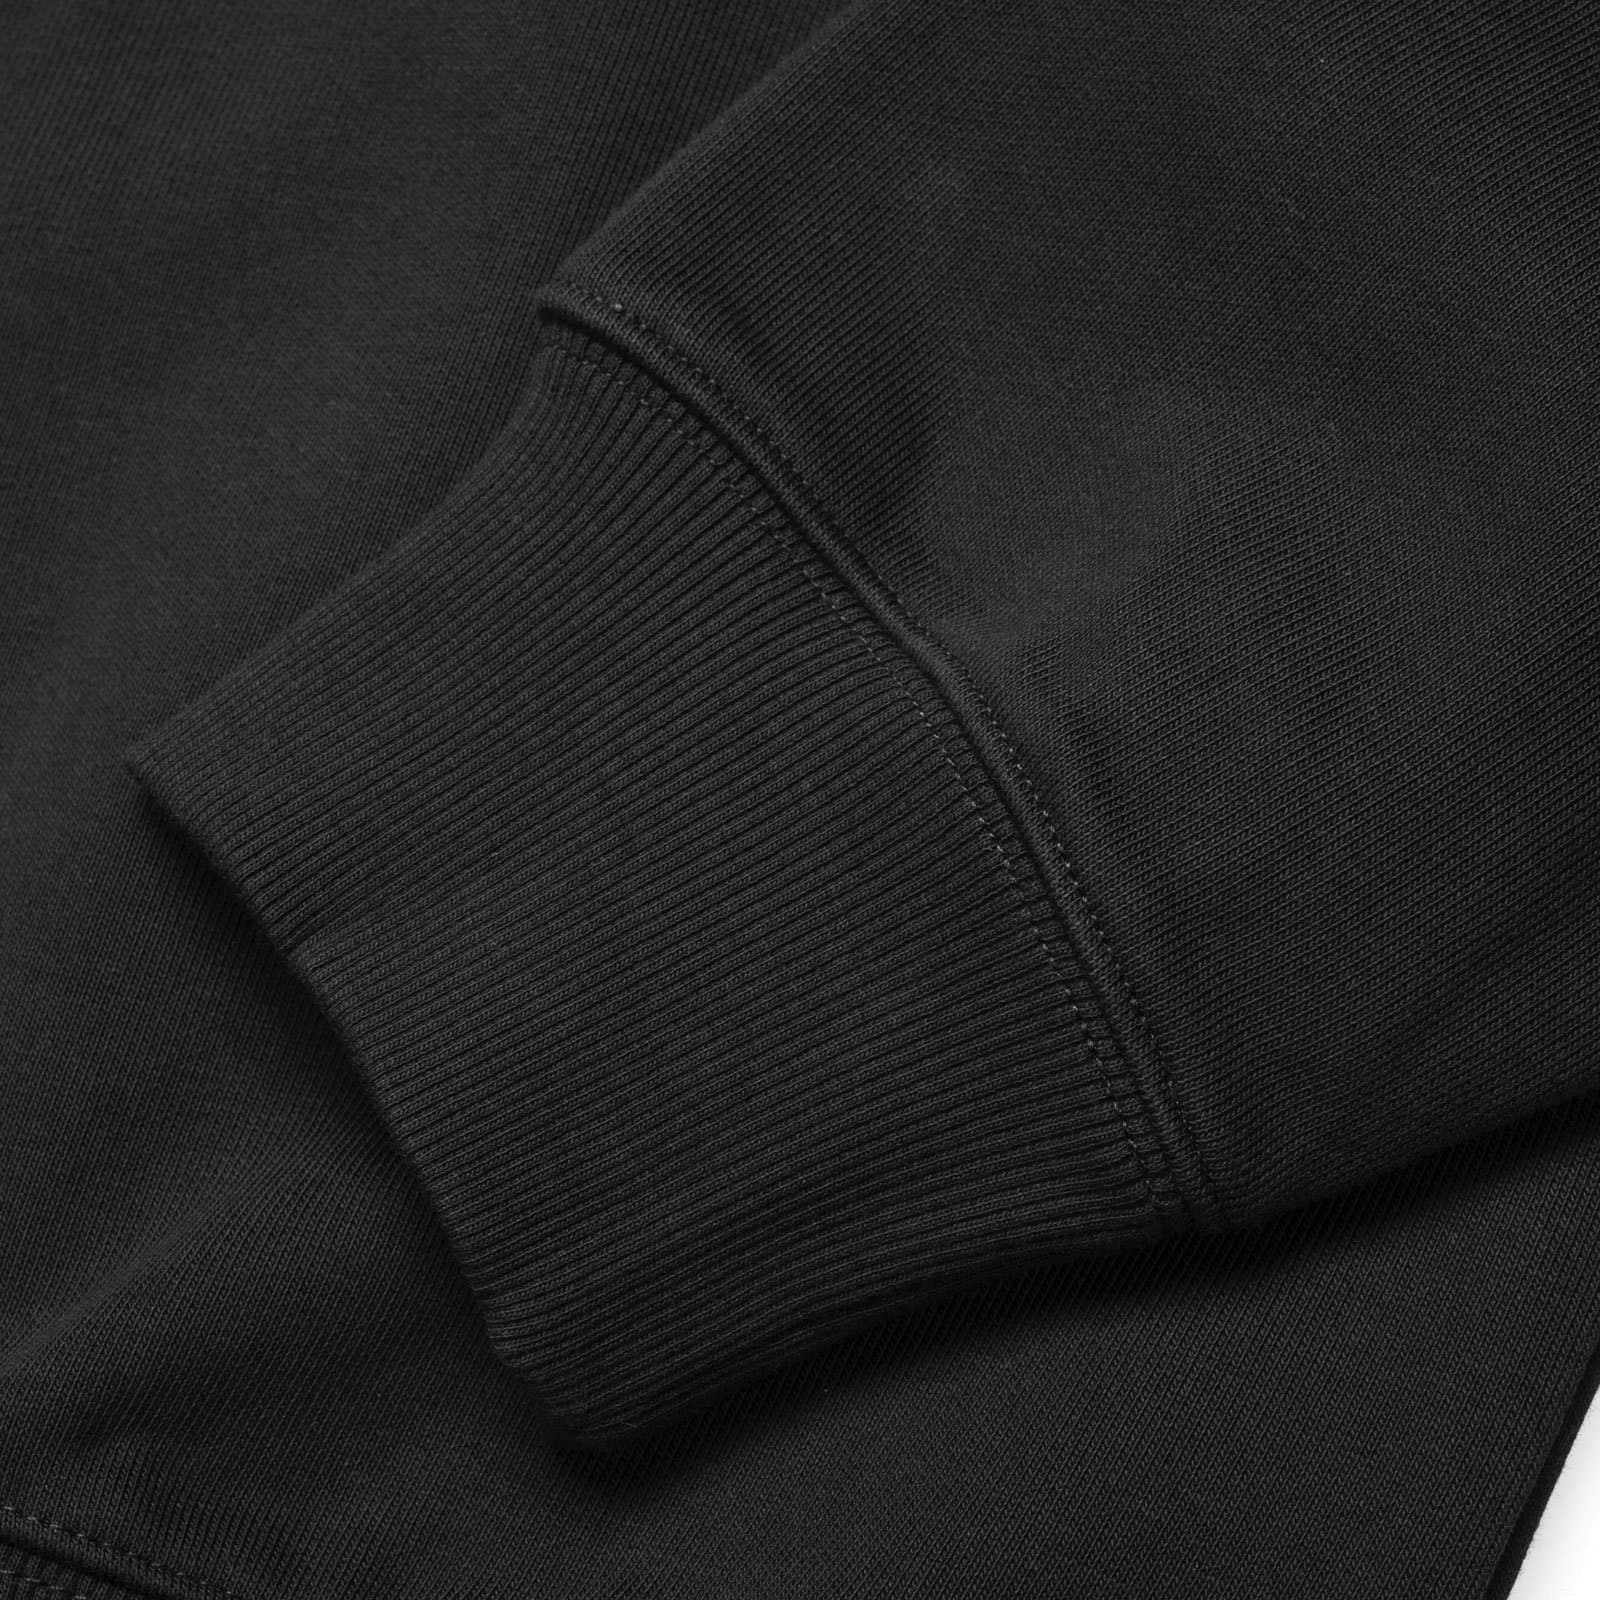 Carhartt WIP Carhartt Sweat Black/White Sleeve Detail